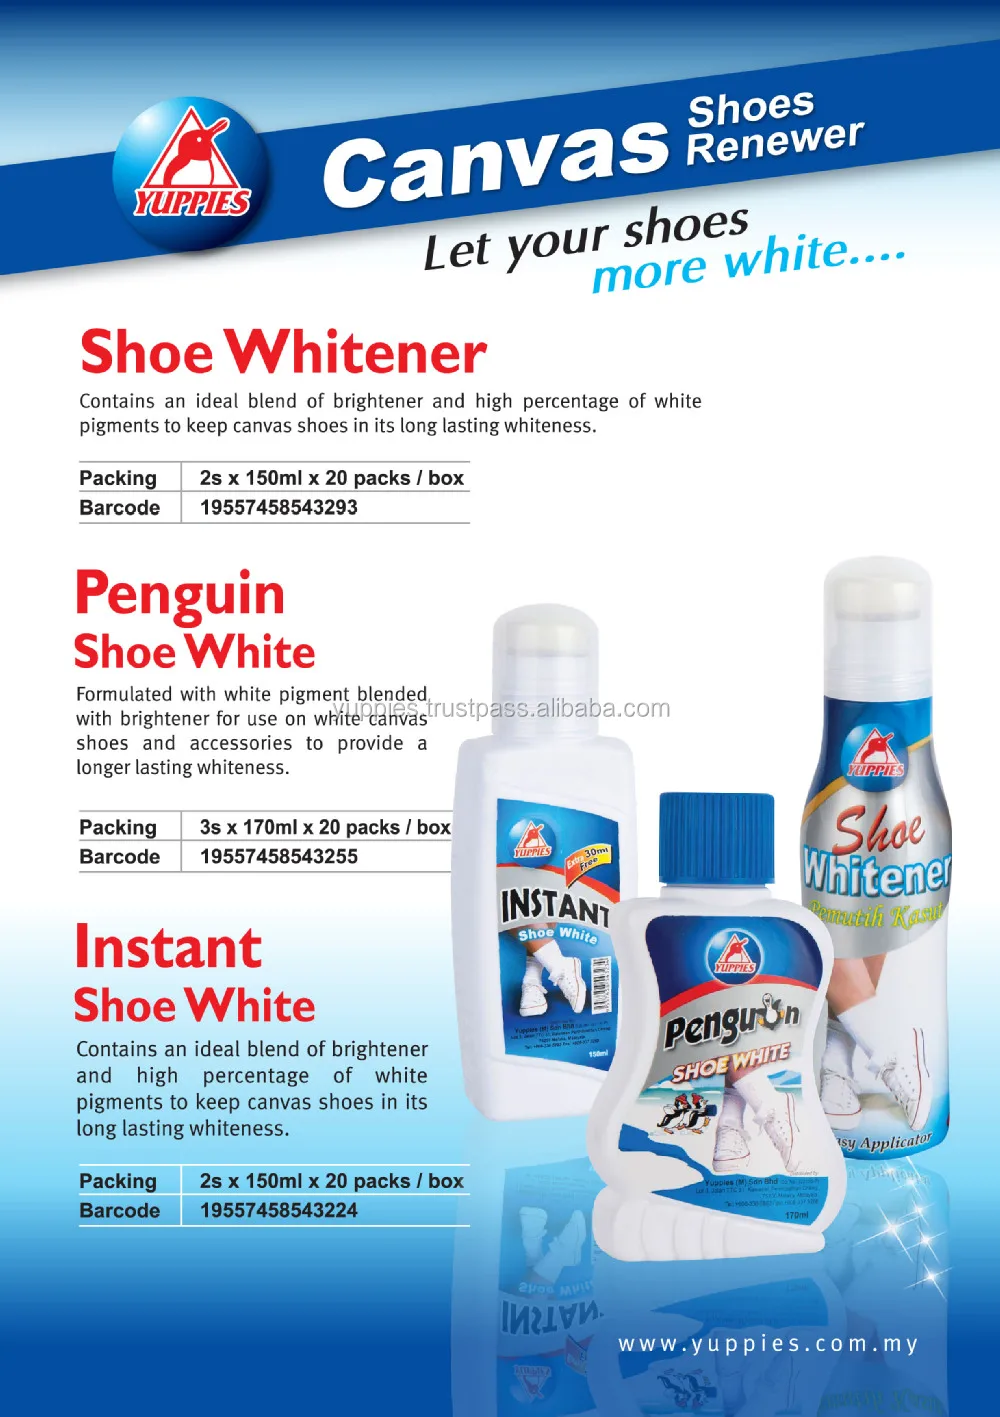 penguin liquid shoe polish